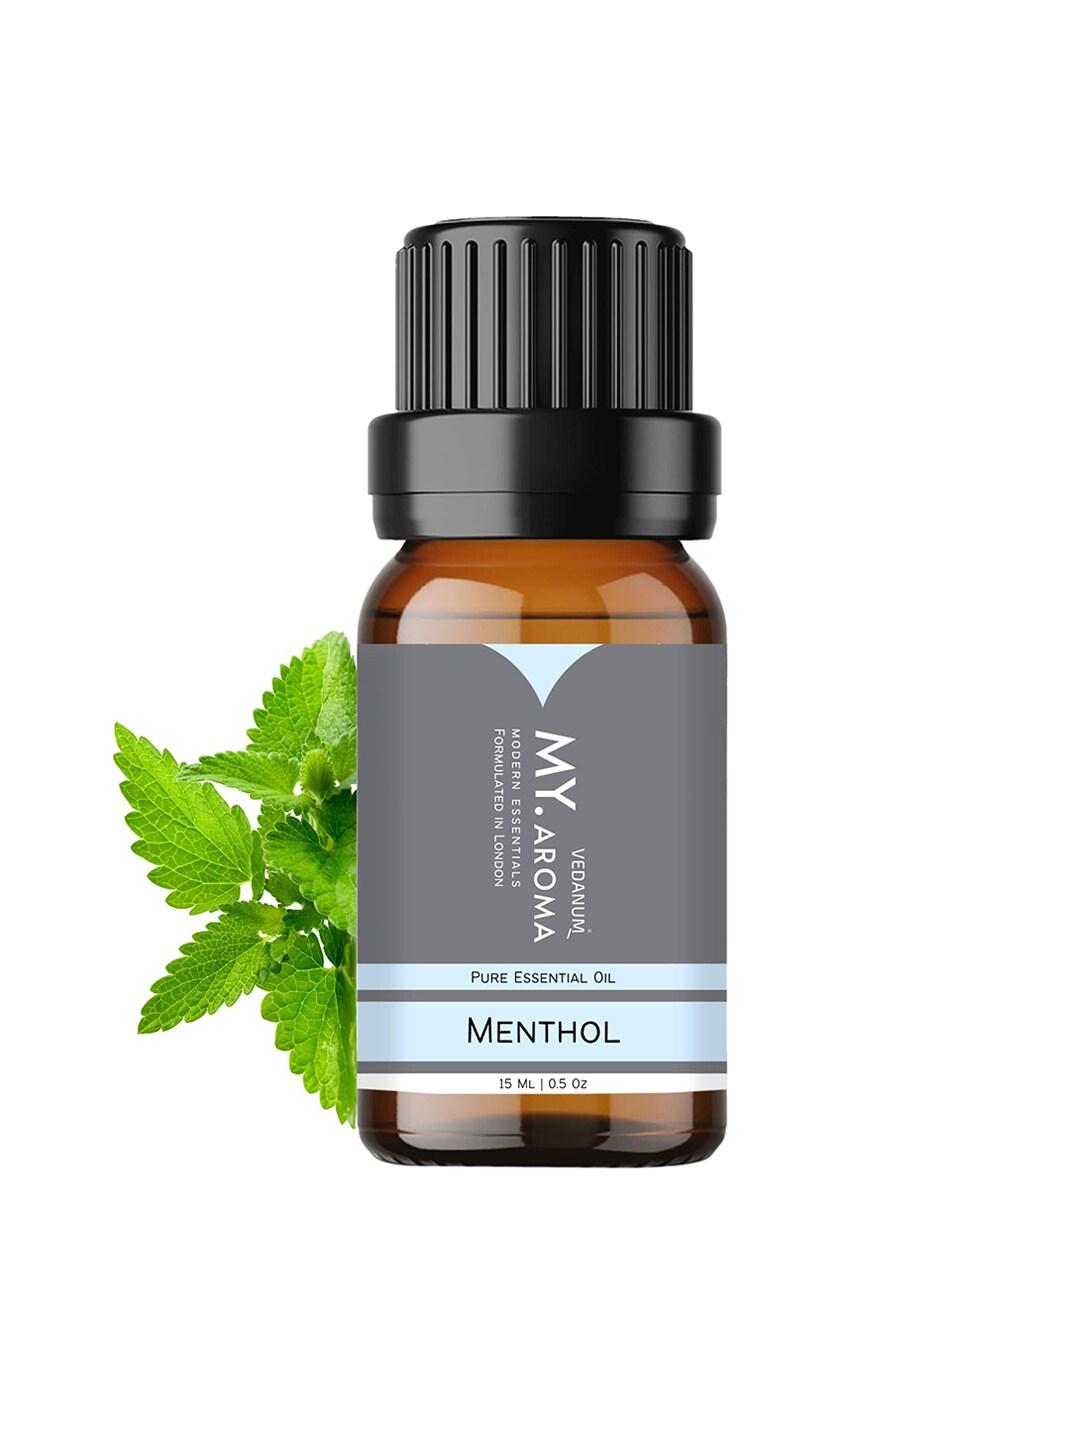 VEDANUM My.Aroma Premium Organic Menthol Essential Oil Fragrance 15ml